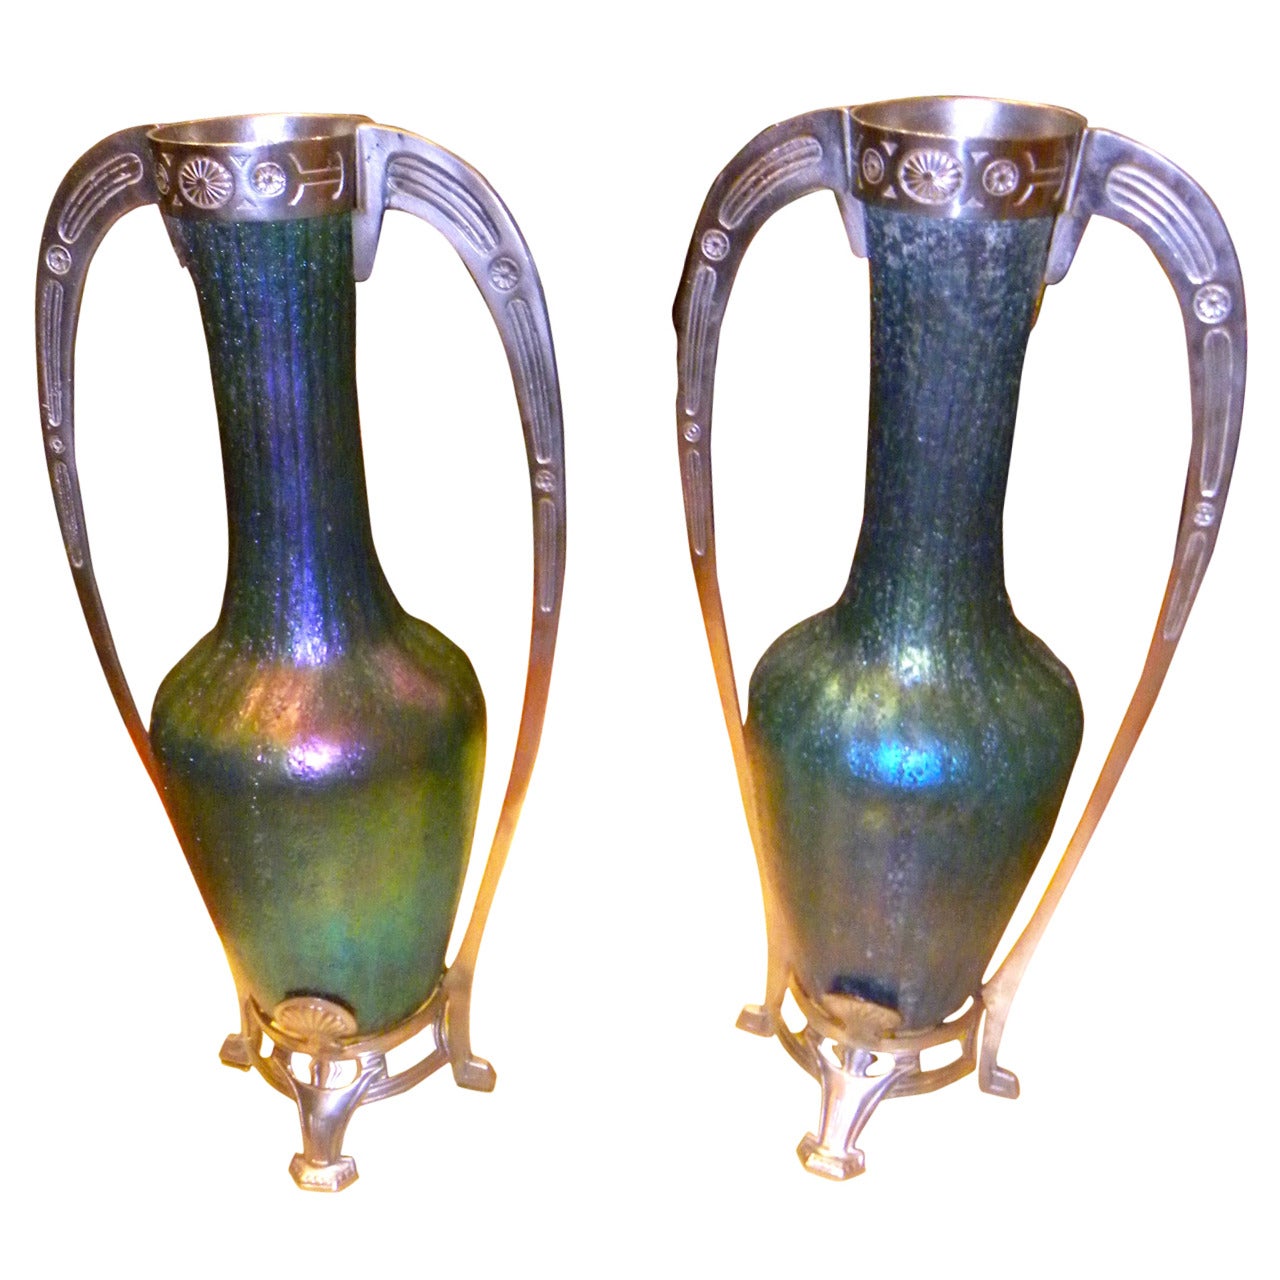 Art Nouveau Loetz Style Glass Vases with Metalwork